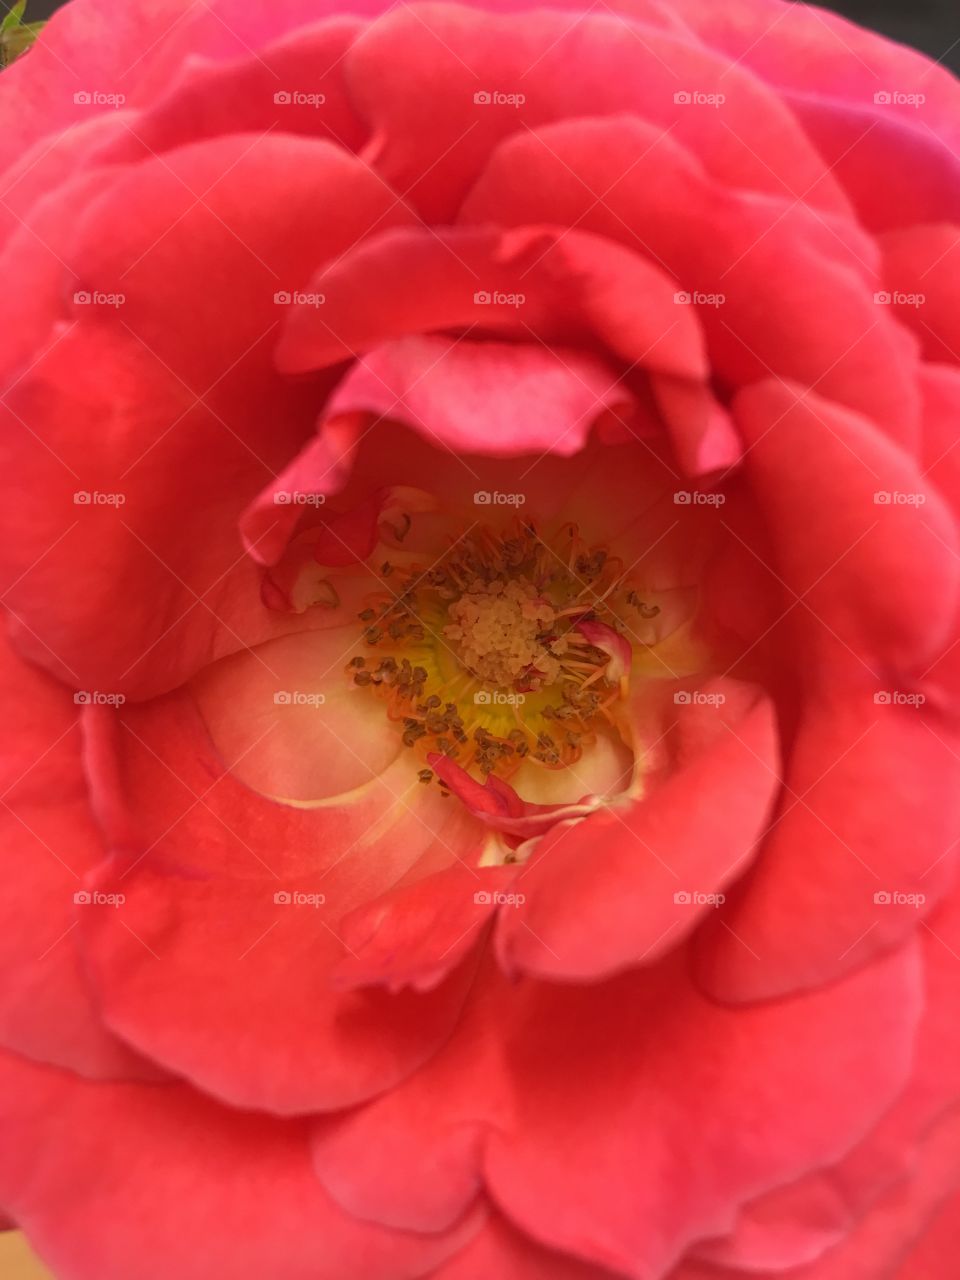 Up close flower